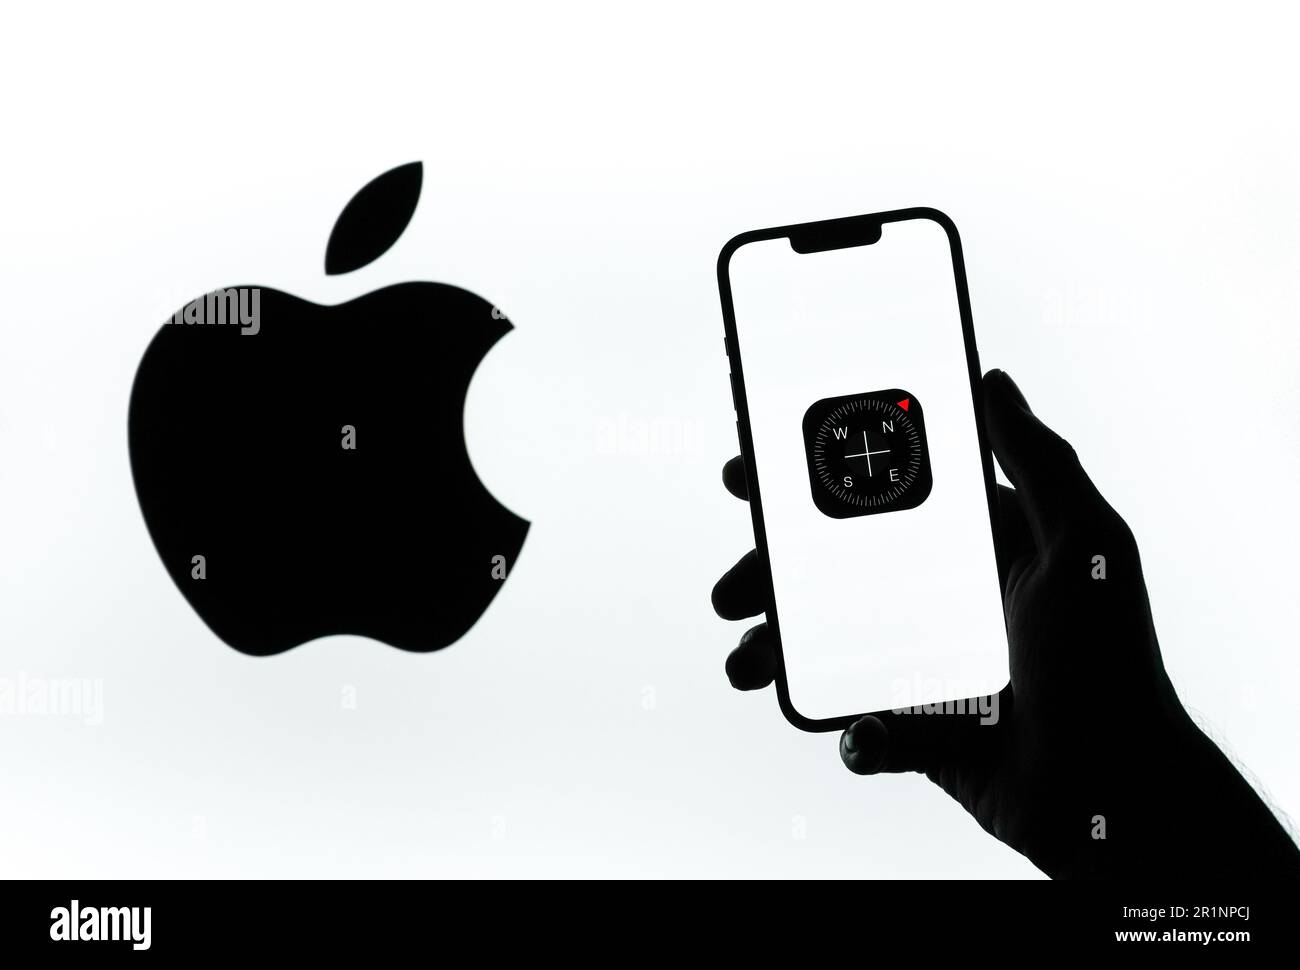 West Bangal, India - February 20, 2023 : Apple Compass app on phone screen stock image. Stock Photo